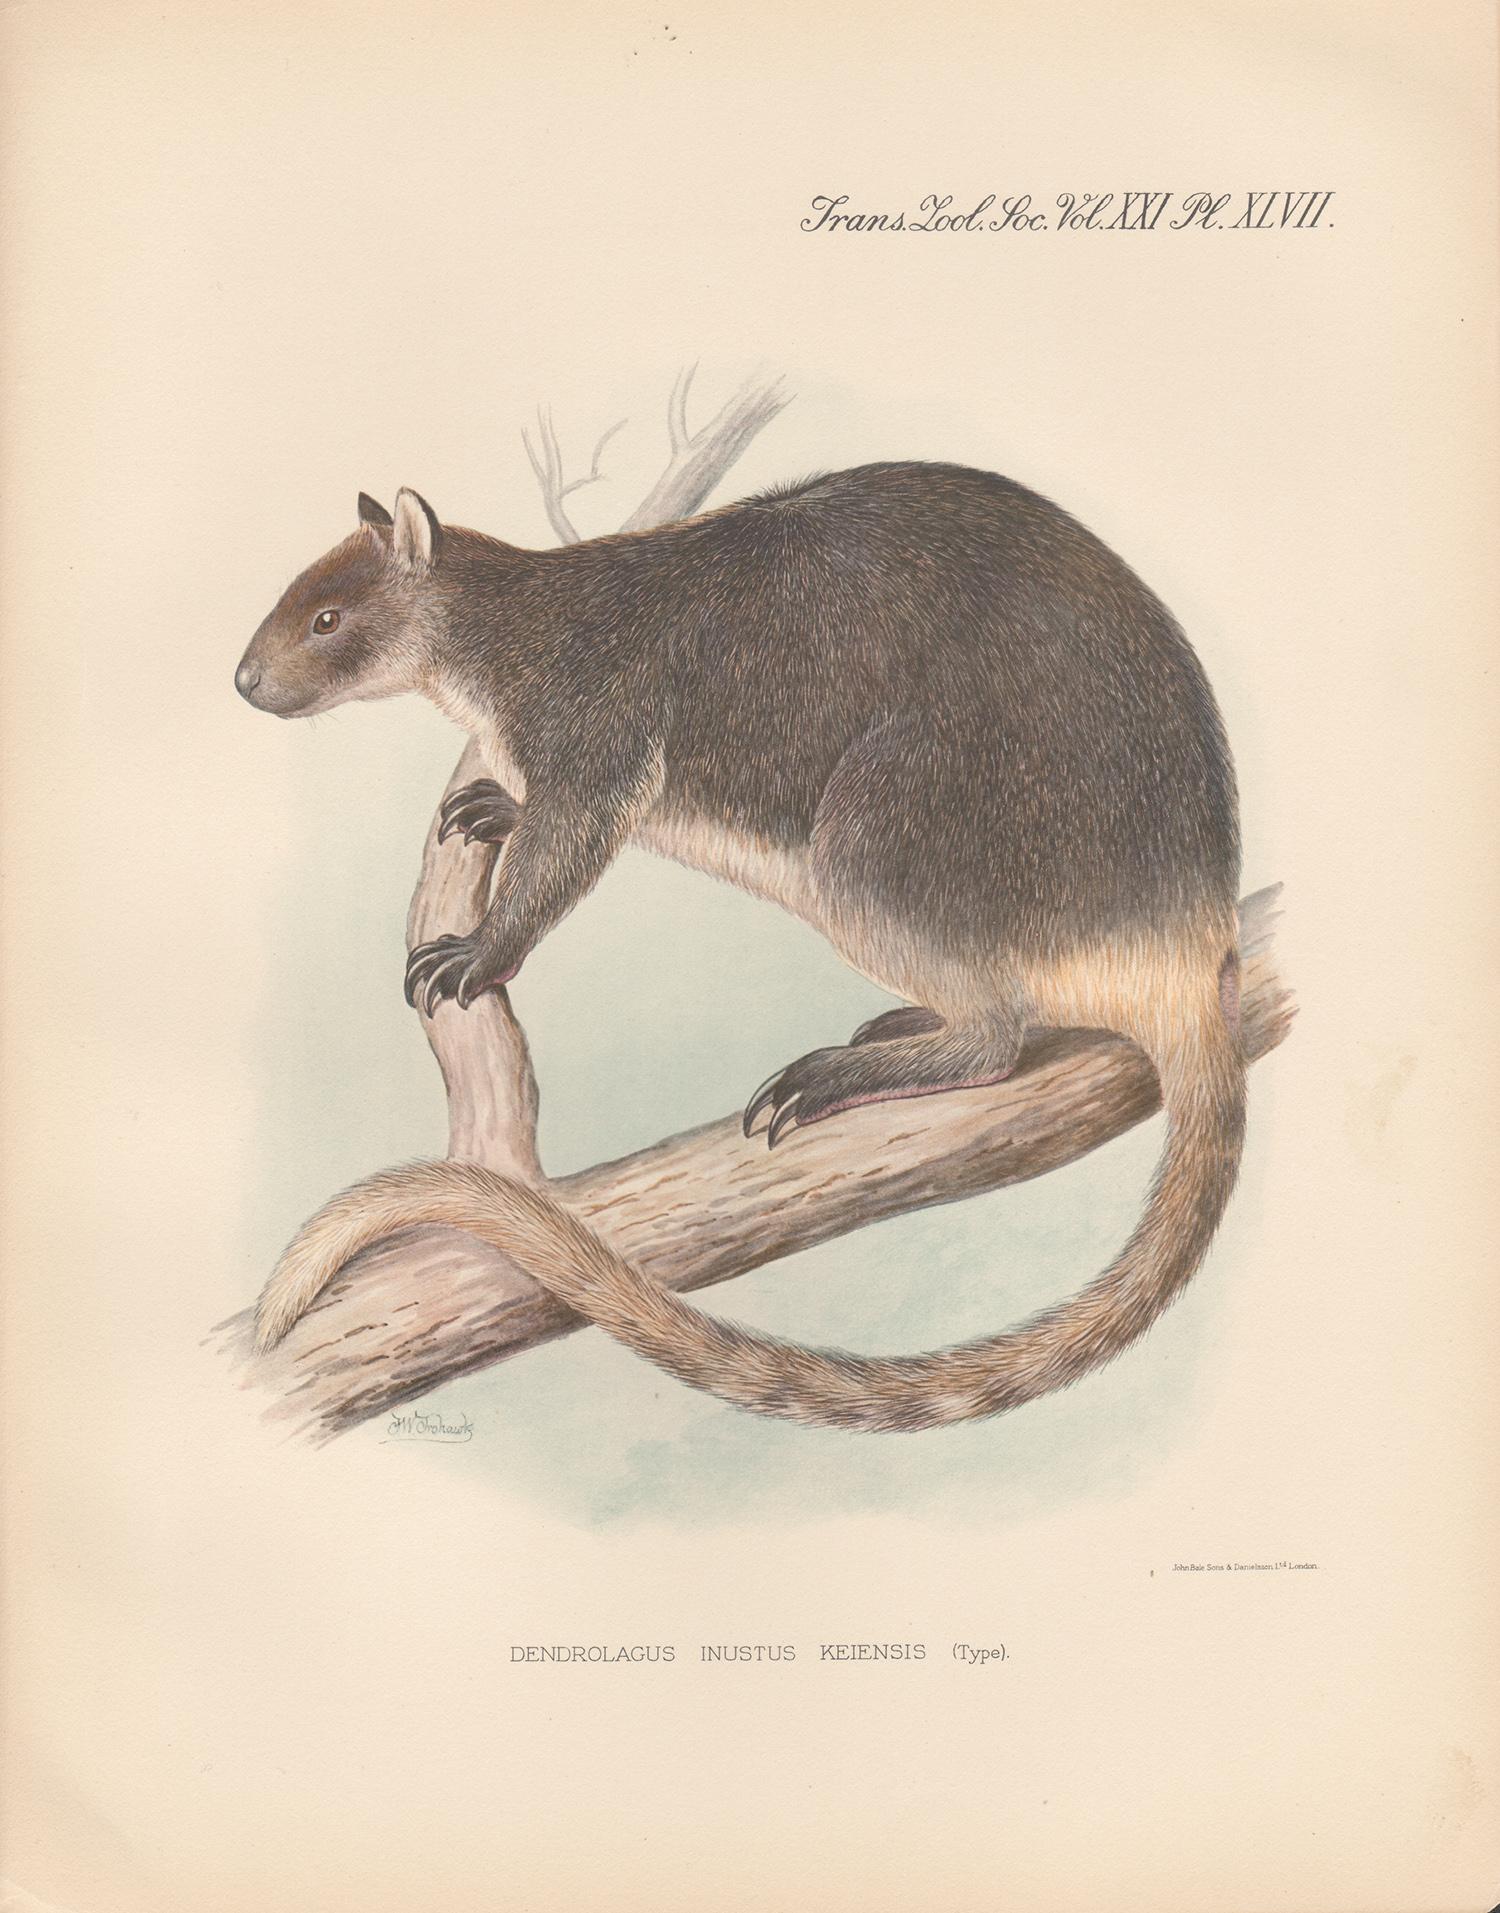 Dendrolaugus Inustus Keiensis, Indonesian tree kangaroo lithograph, 1936